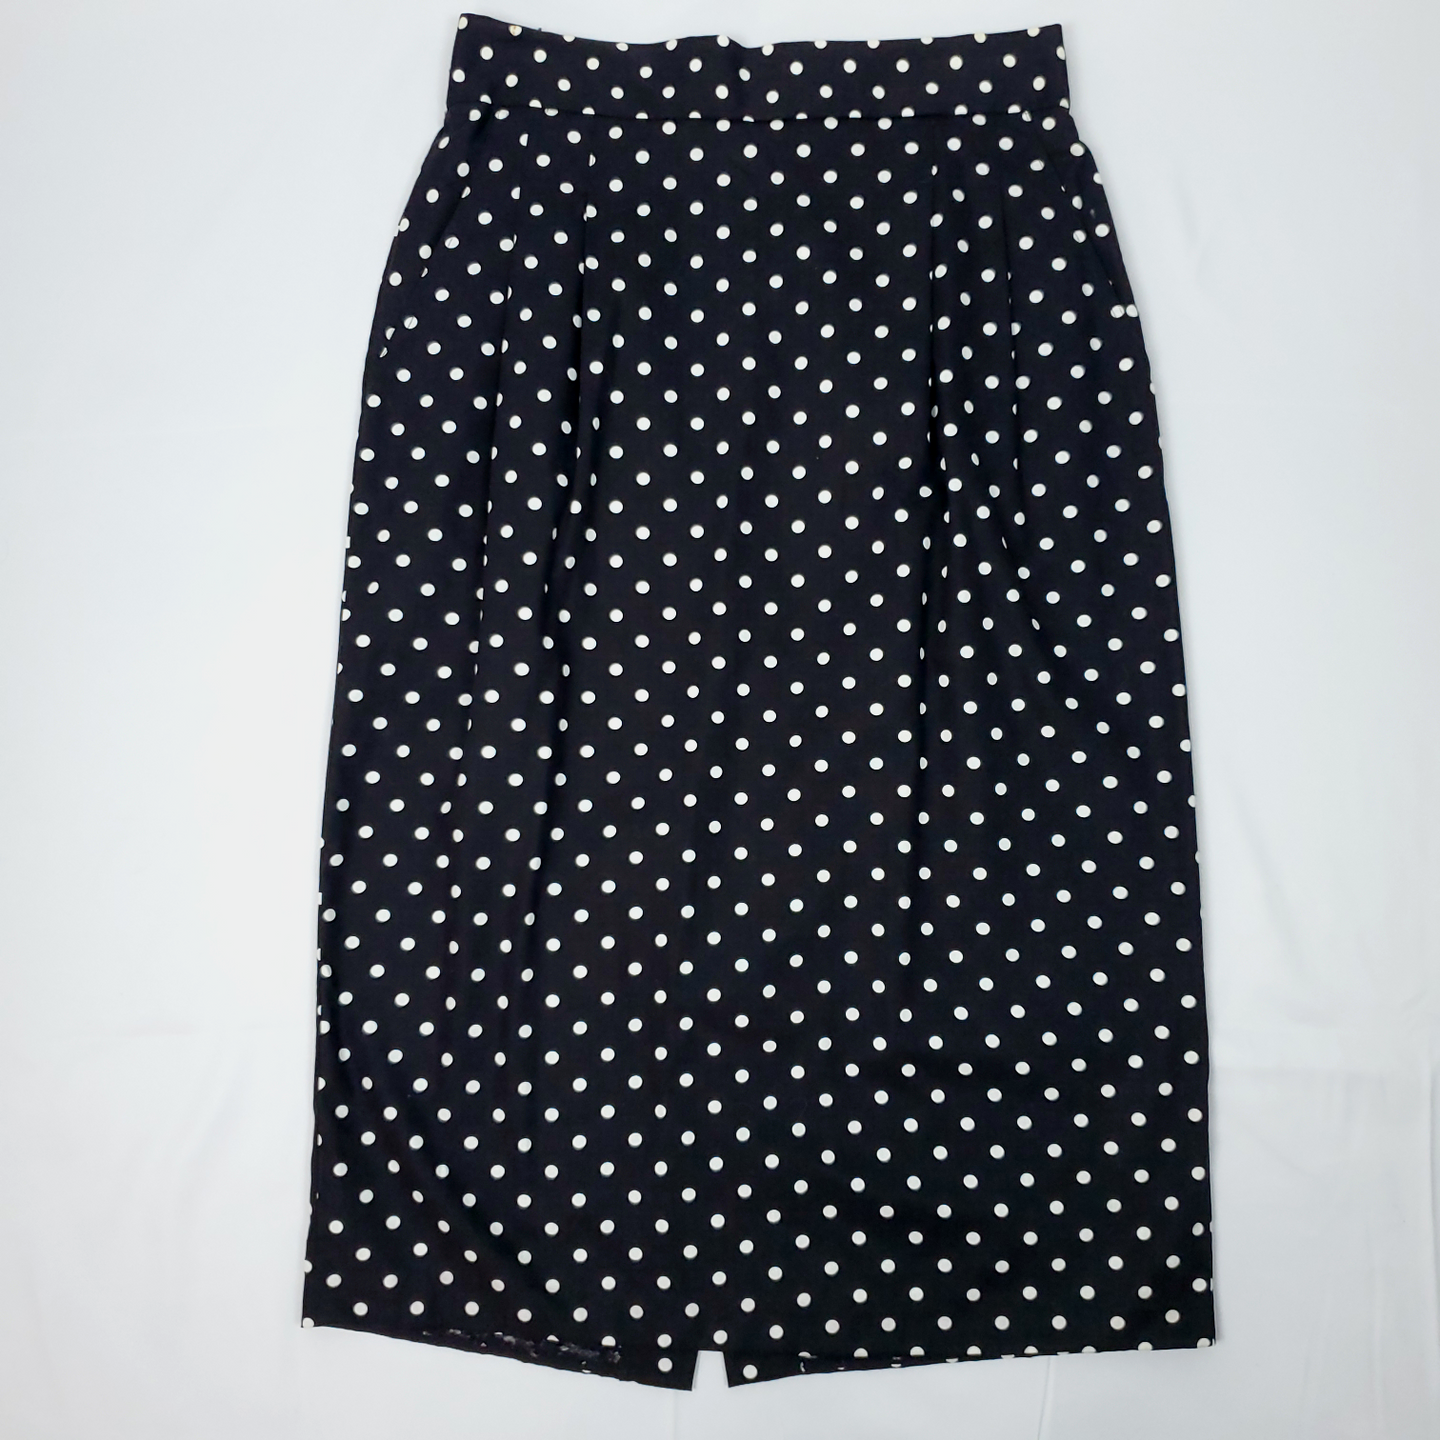 Vintage Polka Dot Pencil Skirt with Pockets Size 14